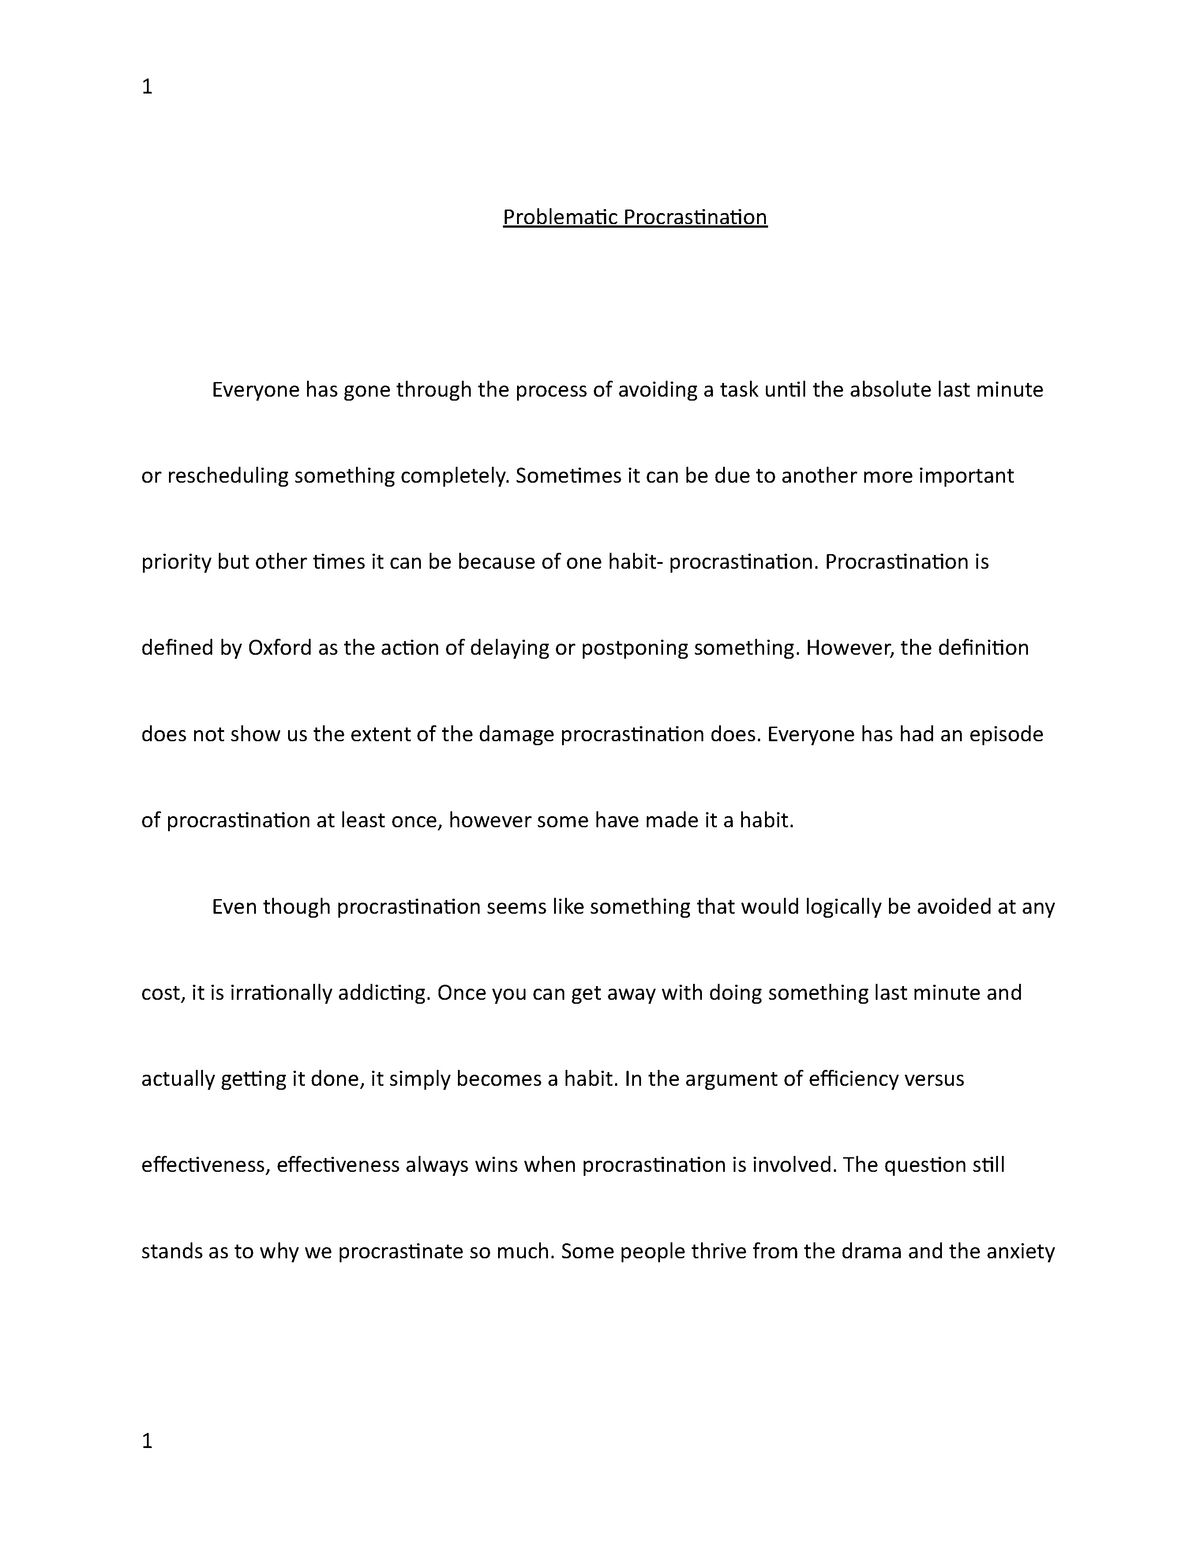 thesis statement for procrastination essay